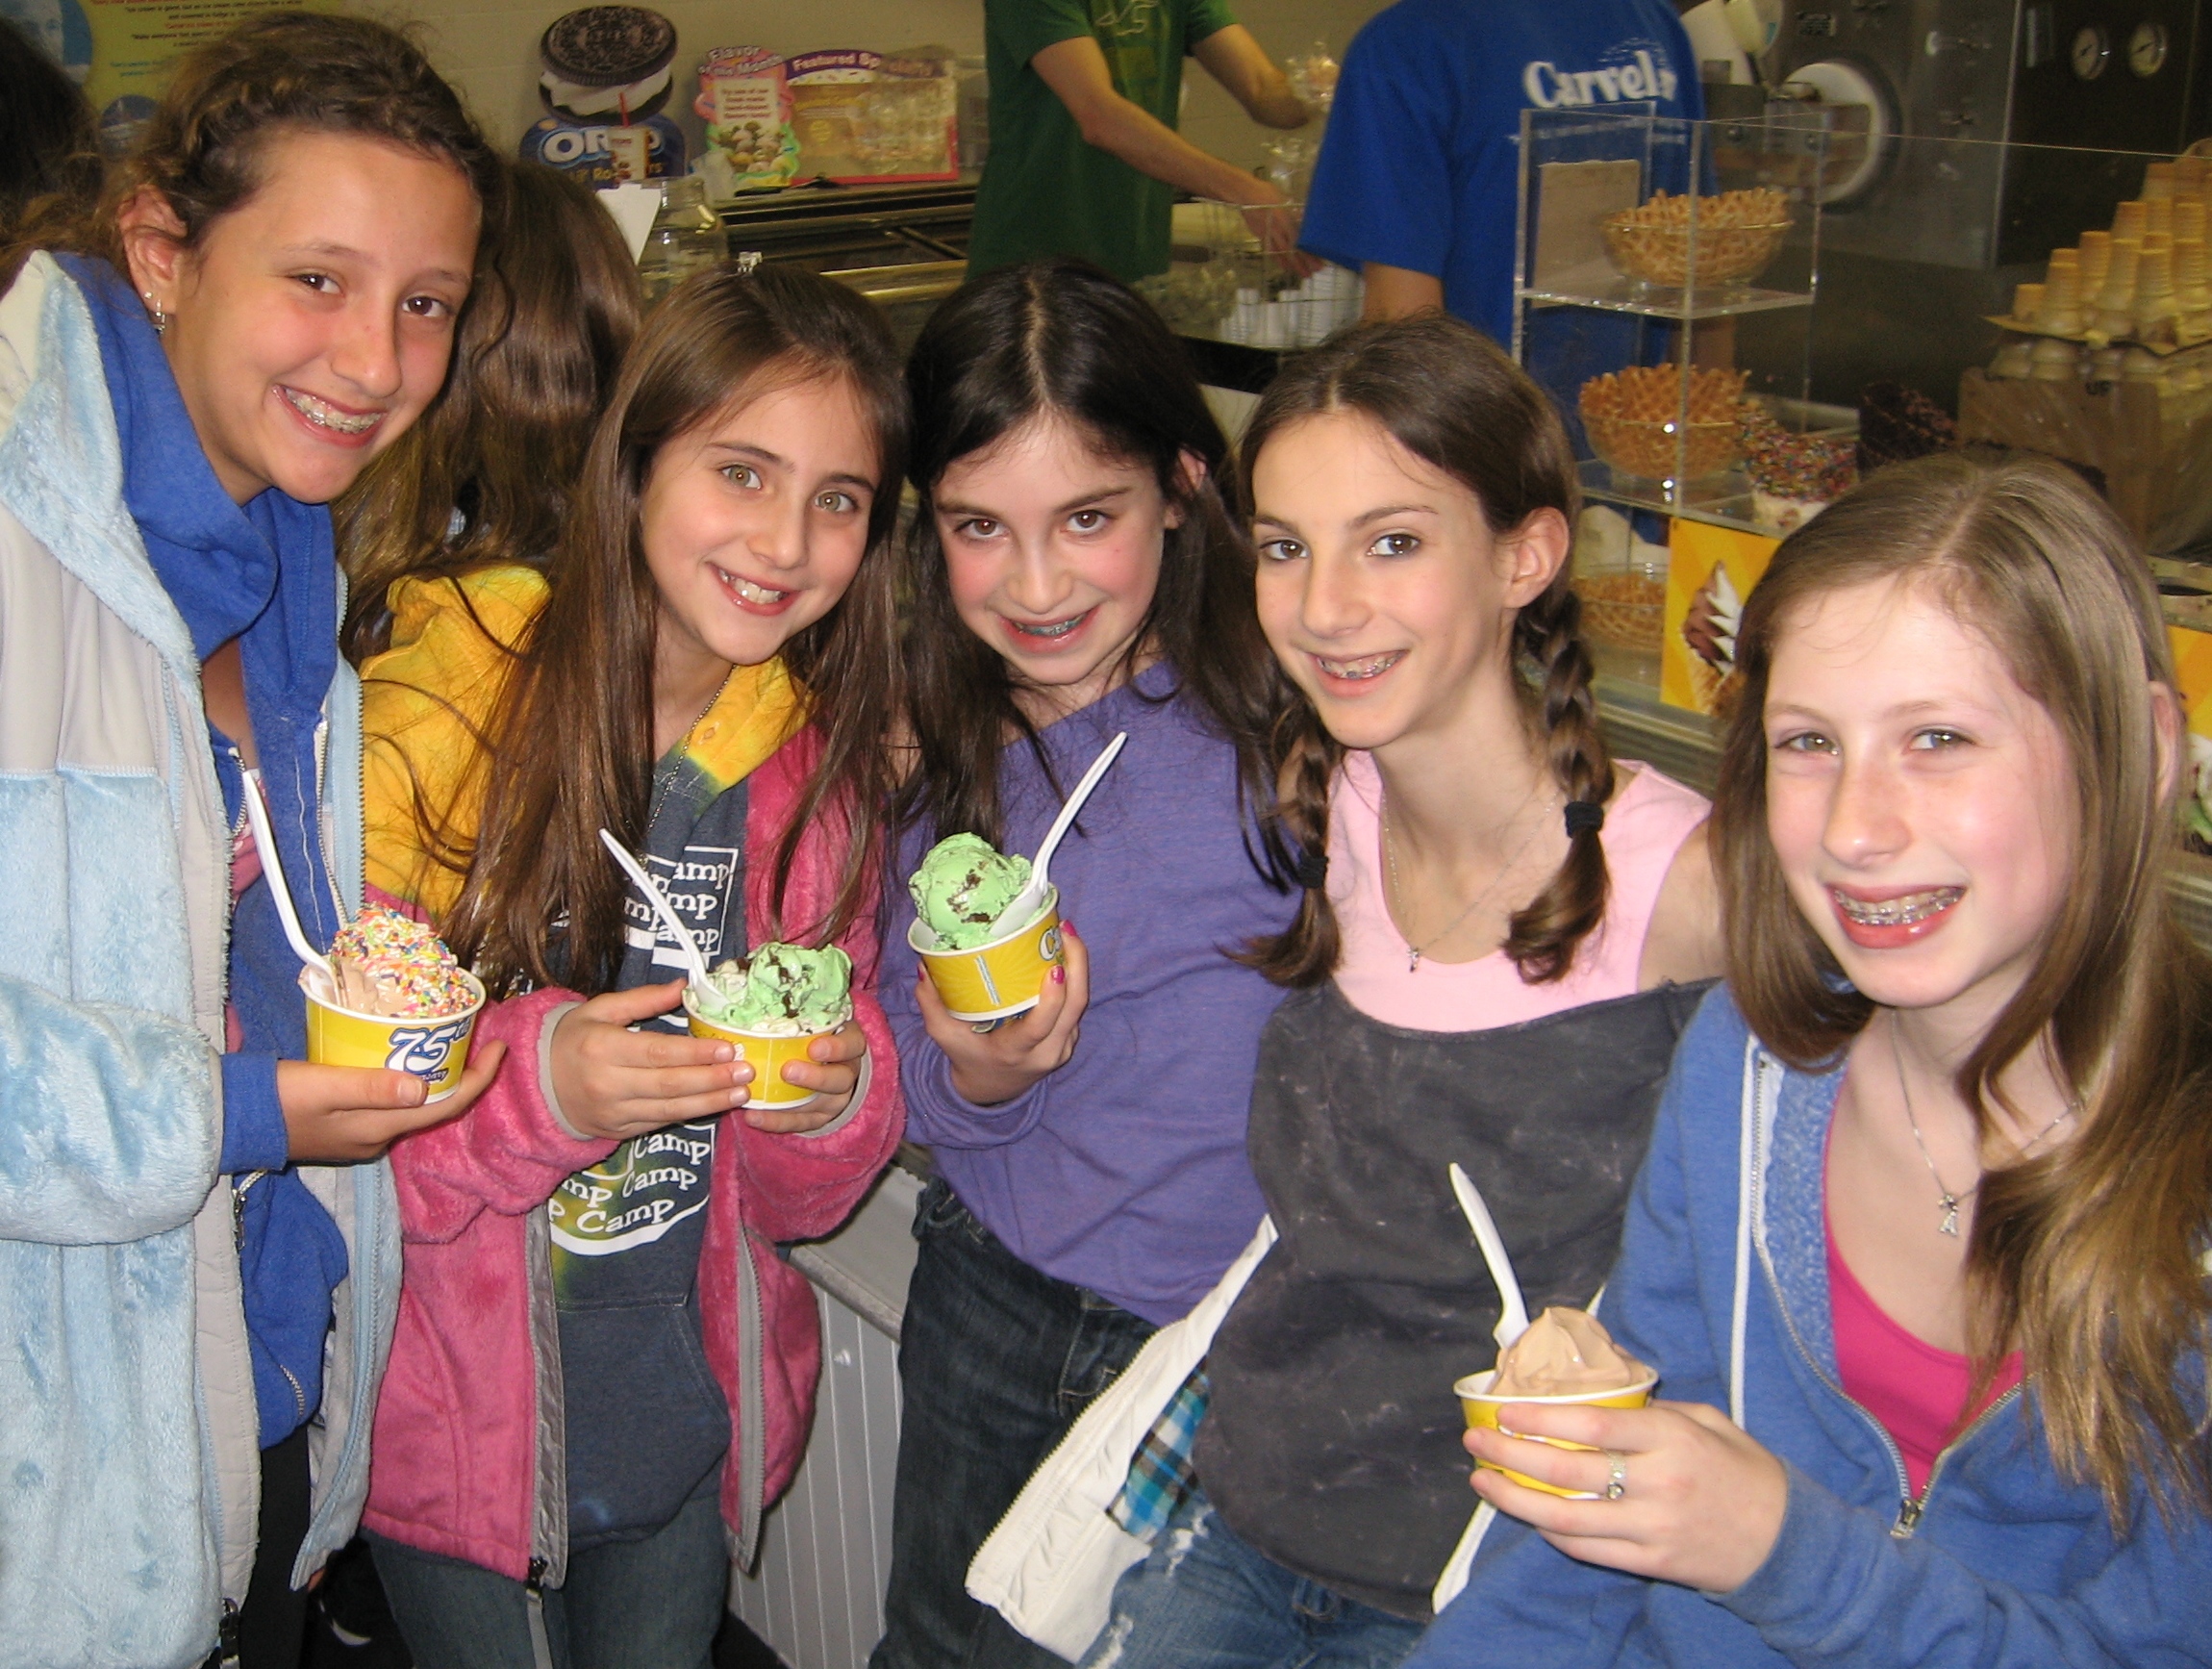 Lauren, Sydney, Erica, Dani and Alex enjoy their ice cream!  